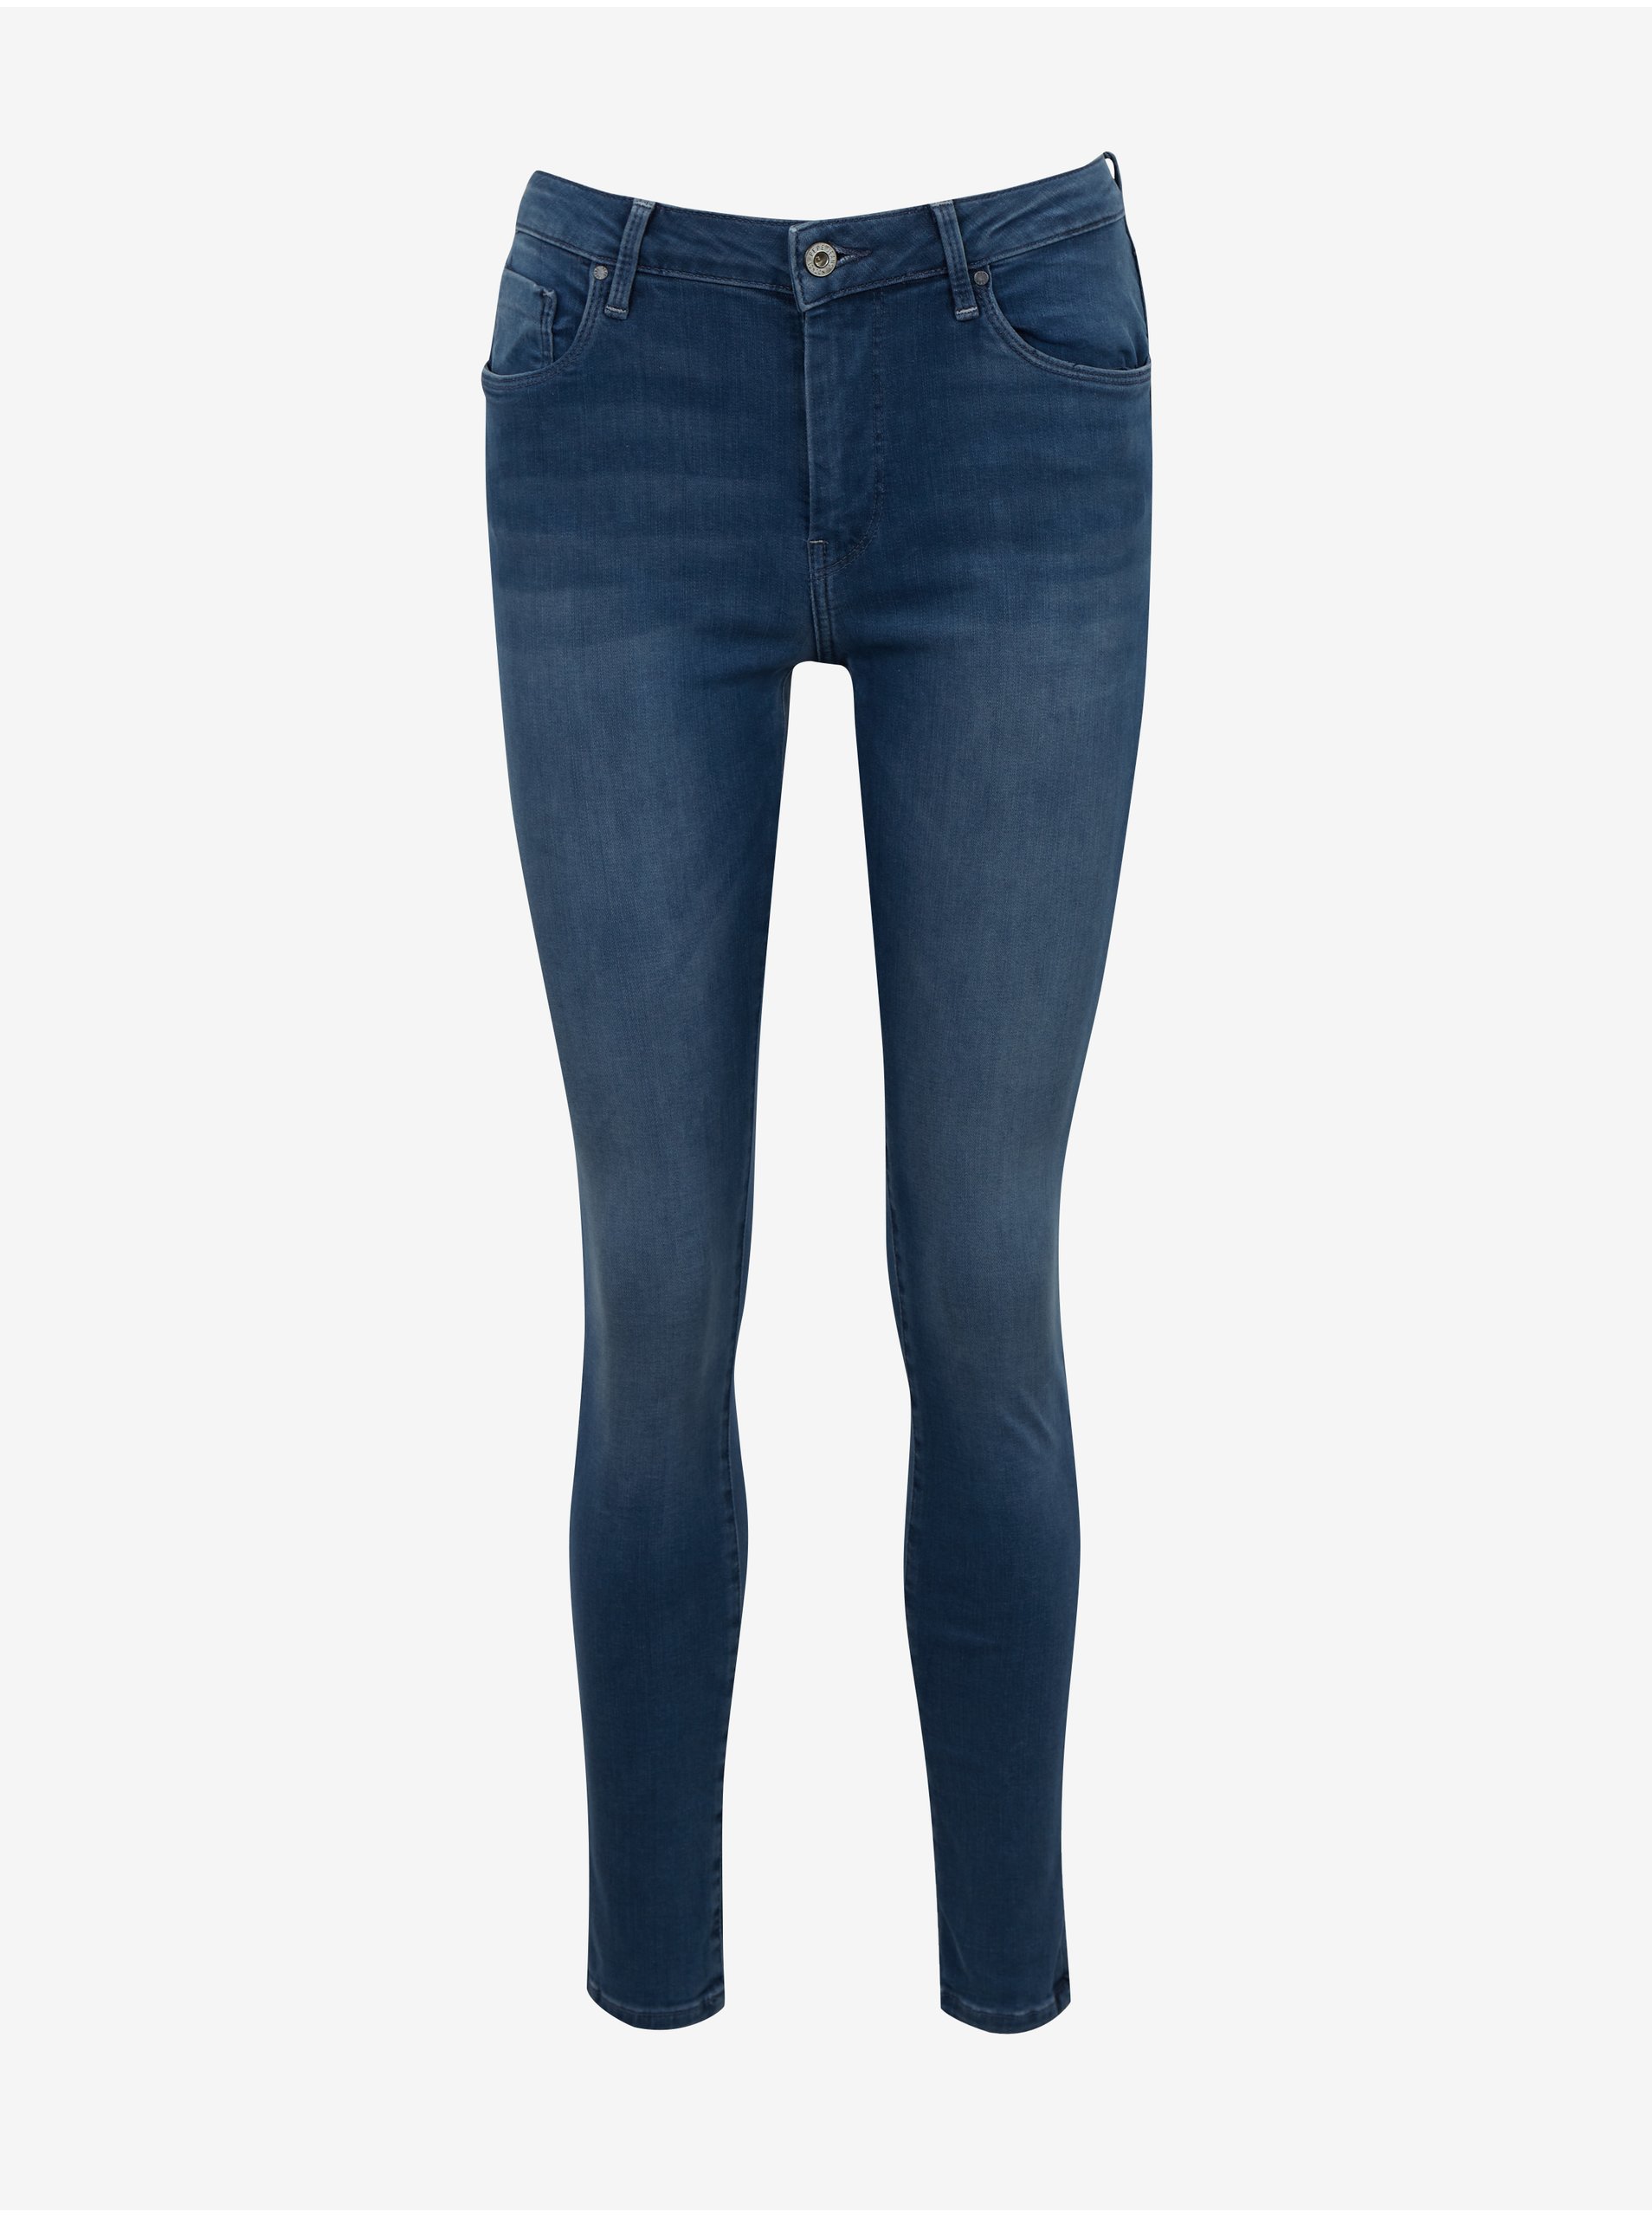 Značka Pepe Jeans - Dark Blue Women's Skinny Fit Jeans Jeans Regent Jeans Jeans Jeans Jeans - Women